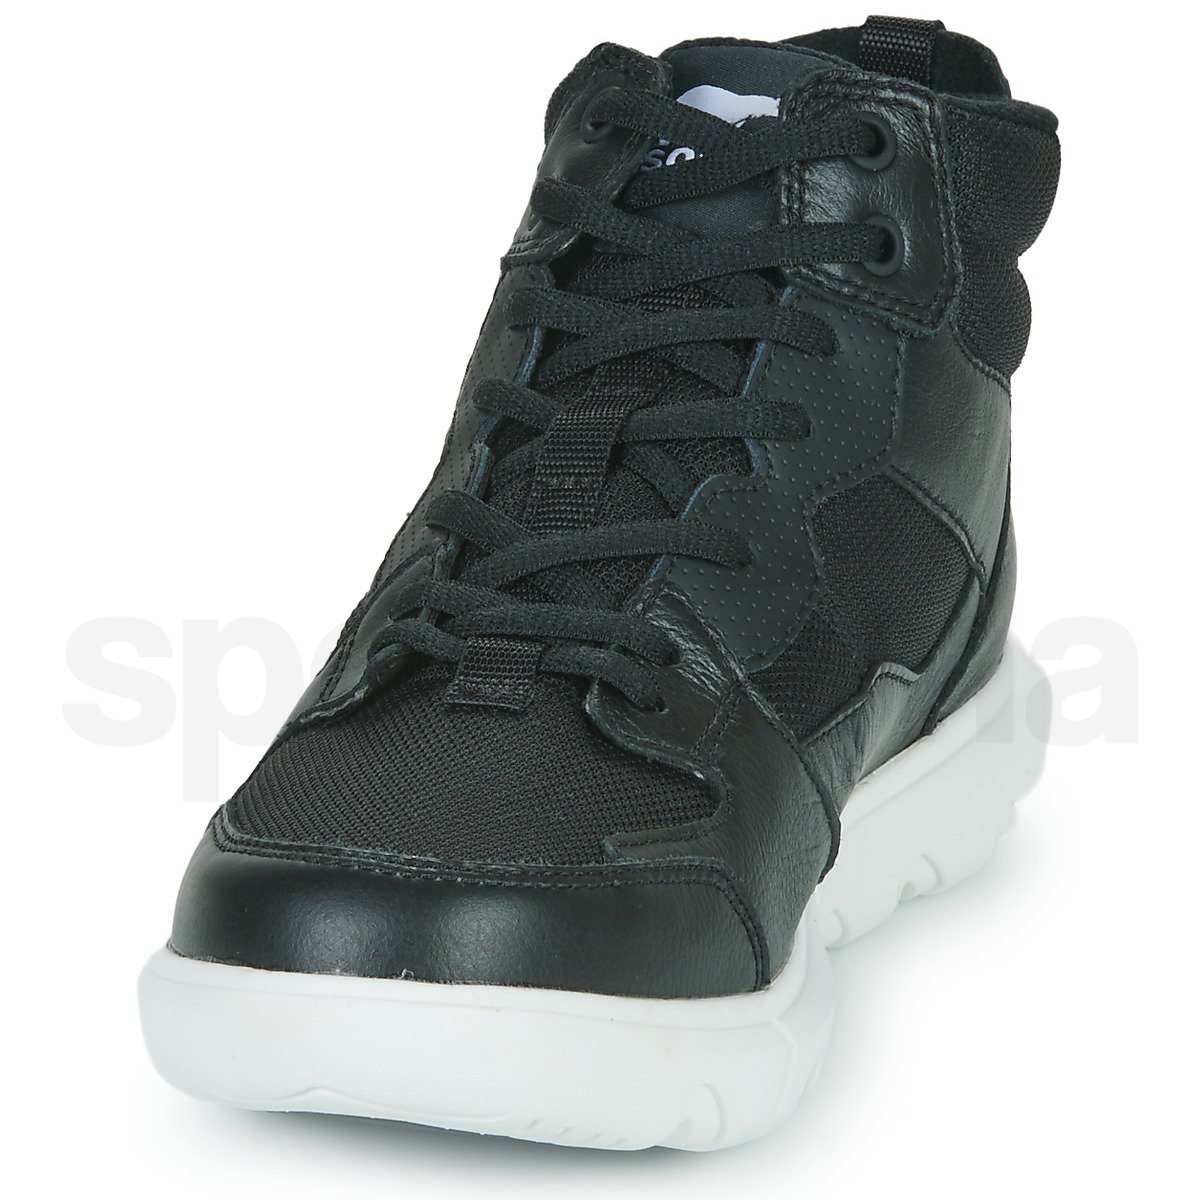 Obuv Sorel Explorer™ II Sneaker Mid WP W - černá/bílá